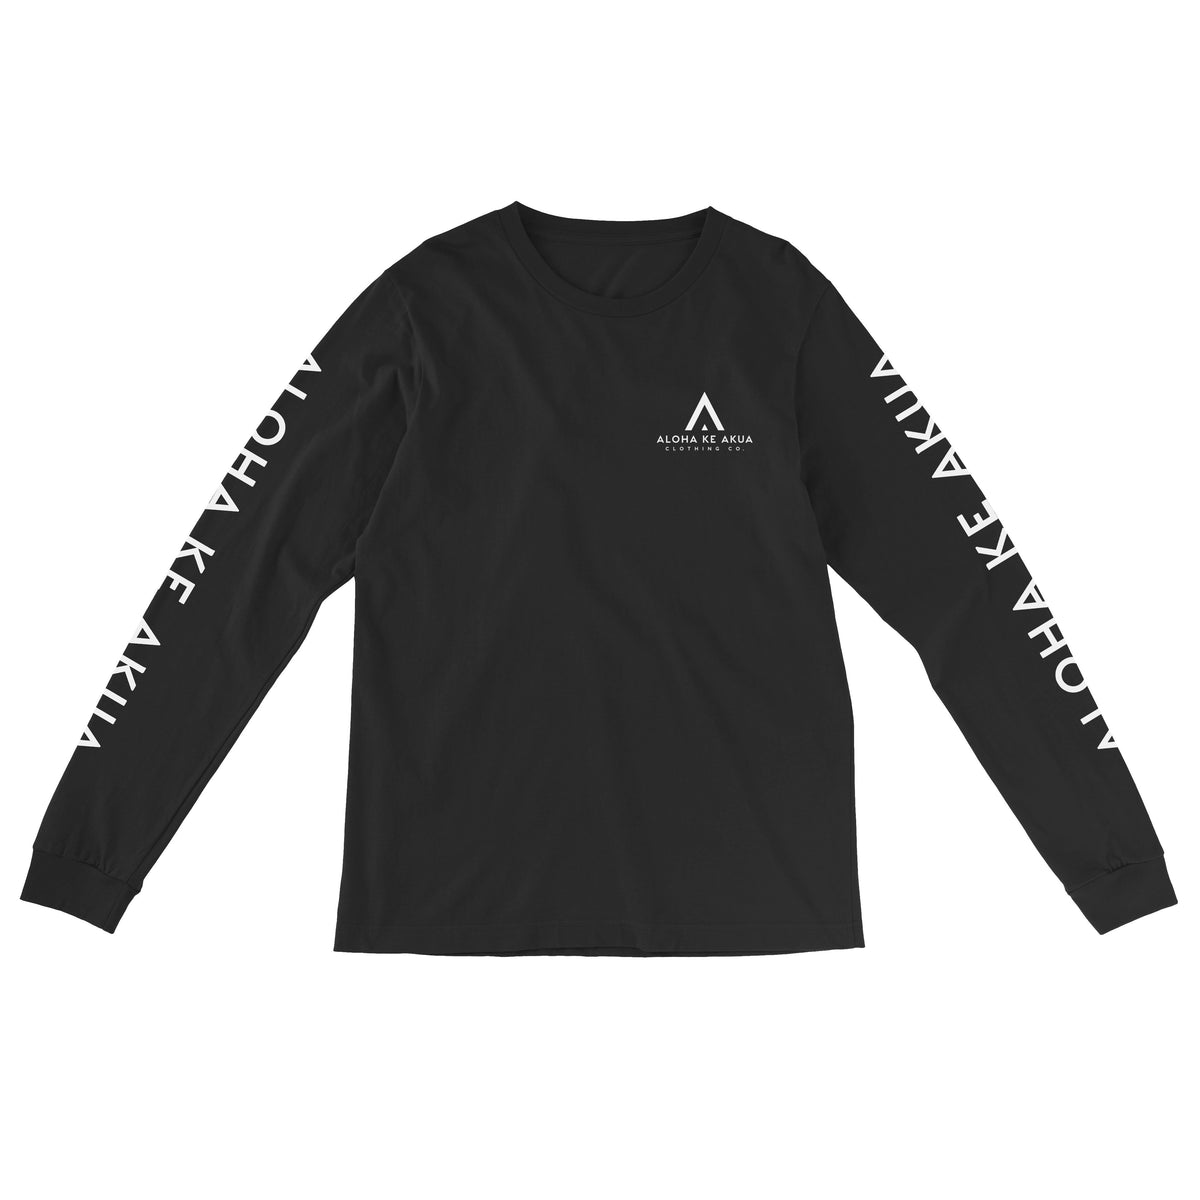 Pop-Up Mākeke - Aloha Ke Akua Clothing - AKA Long Sleeve Shirt - Black - Front View